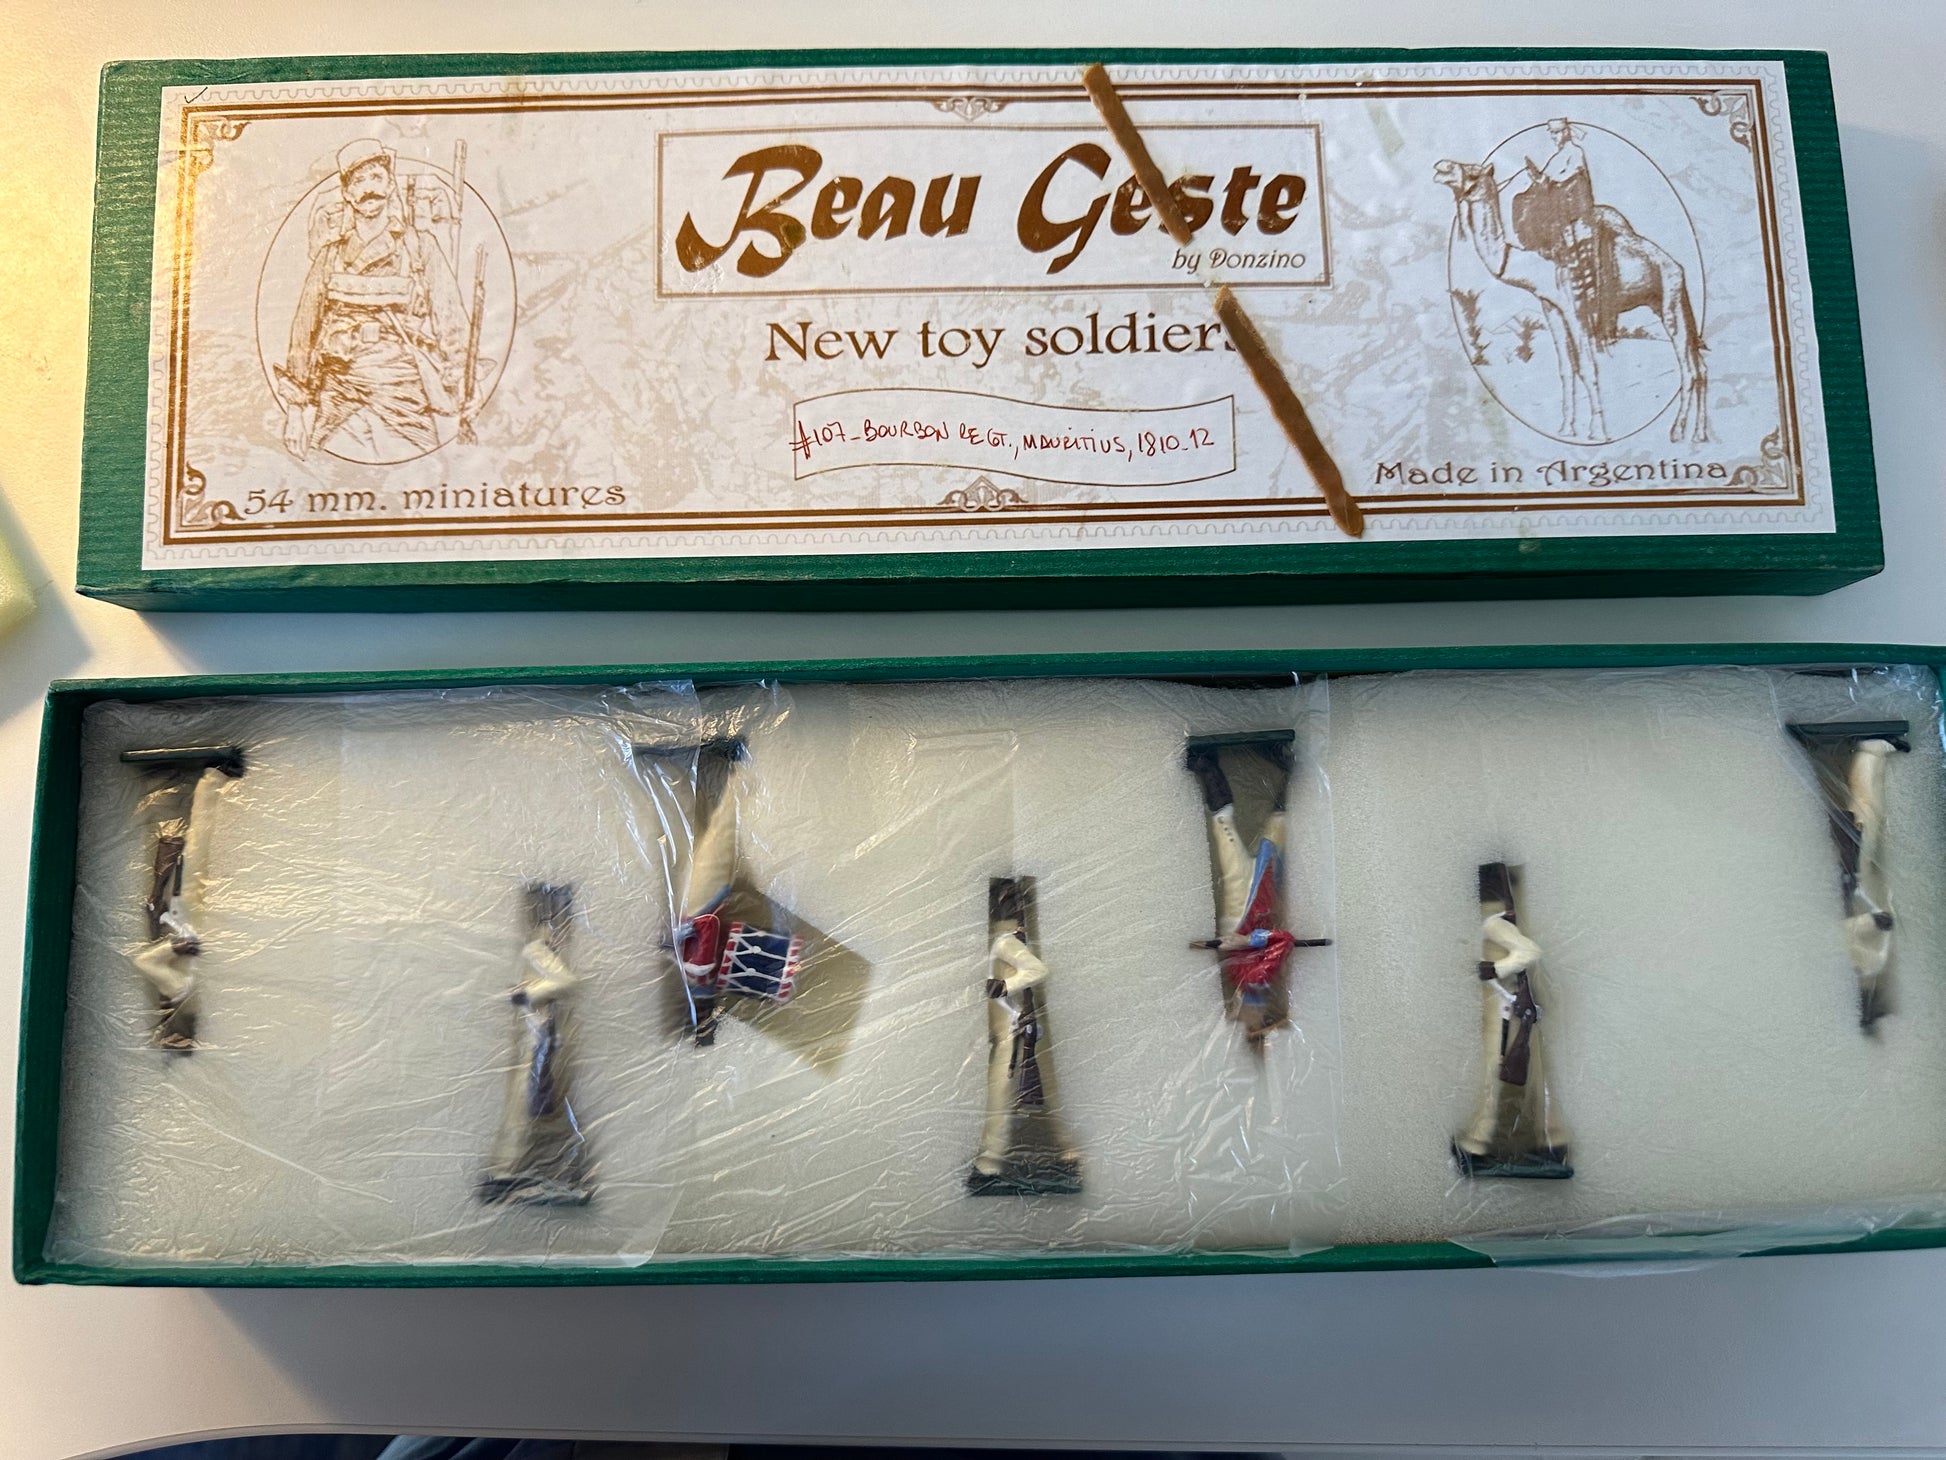 Collectible toy soldier army men set Bourbon Regiment Mauritius 1810-12. In original box.